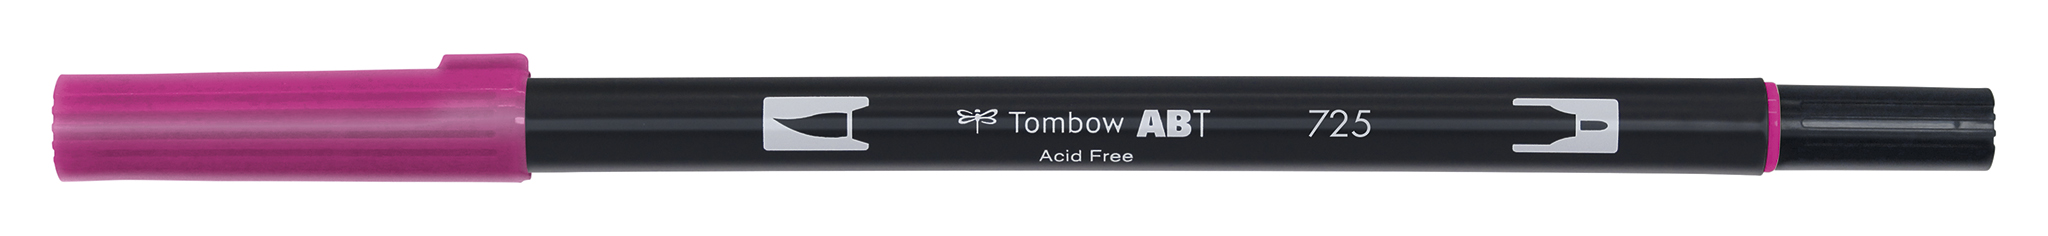 Tombow Art Brush Pen, rhodamine red